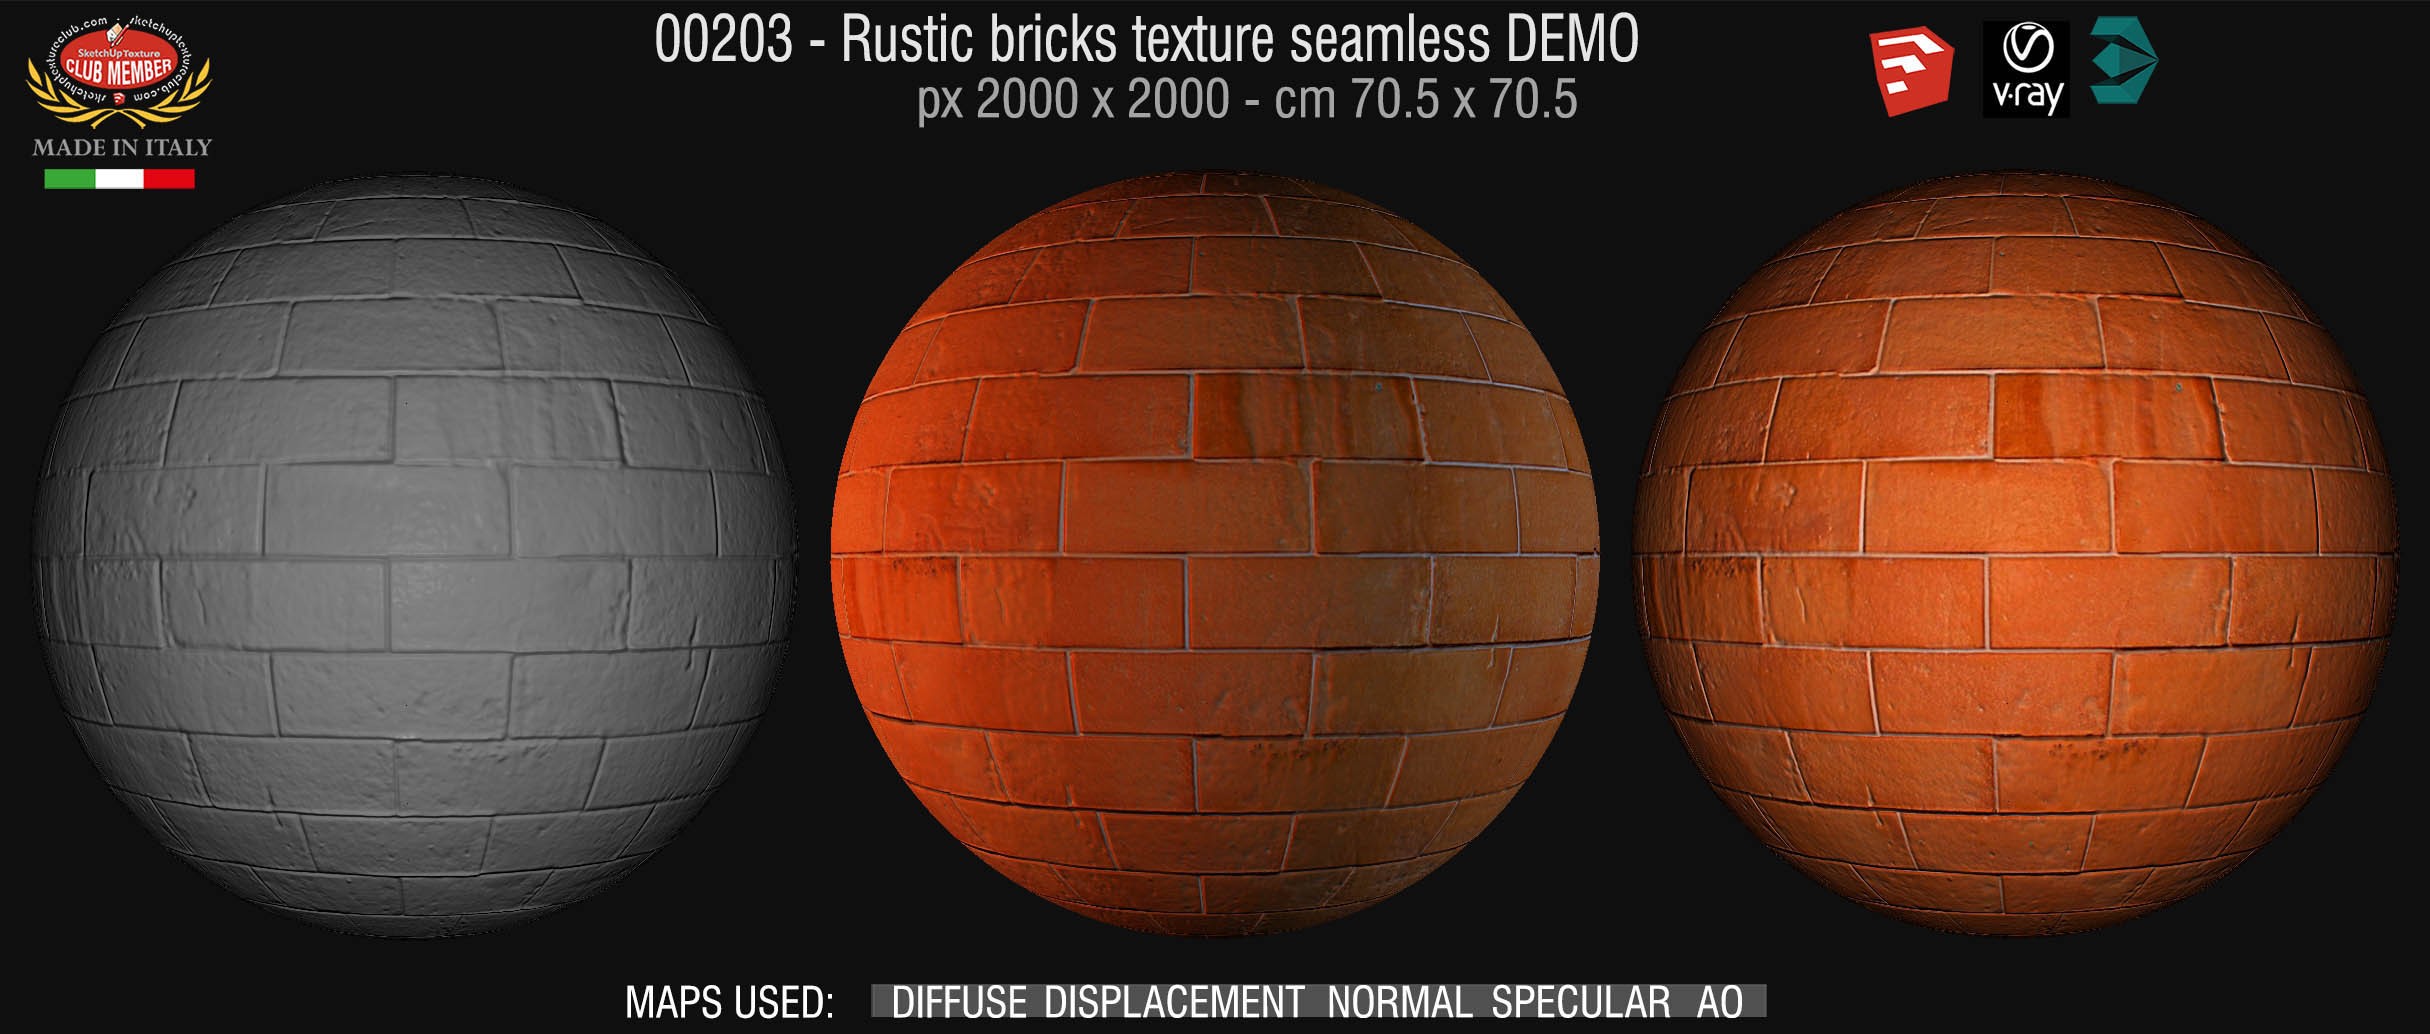 00203 Rustic bricks texture seamless + maps DEMO